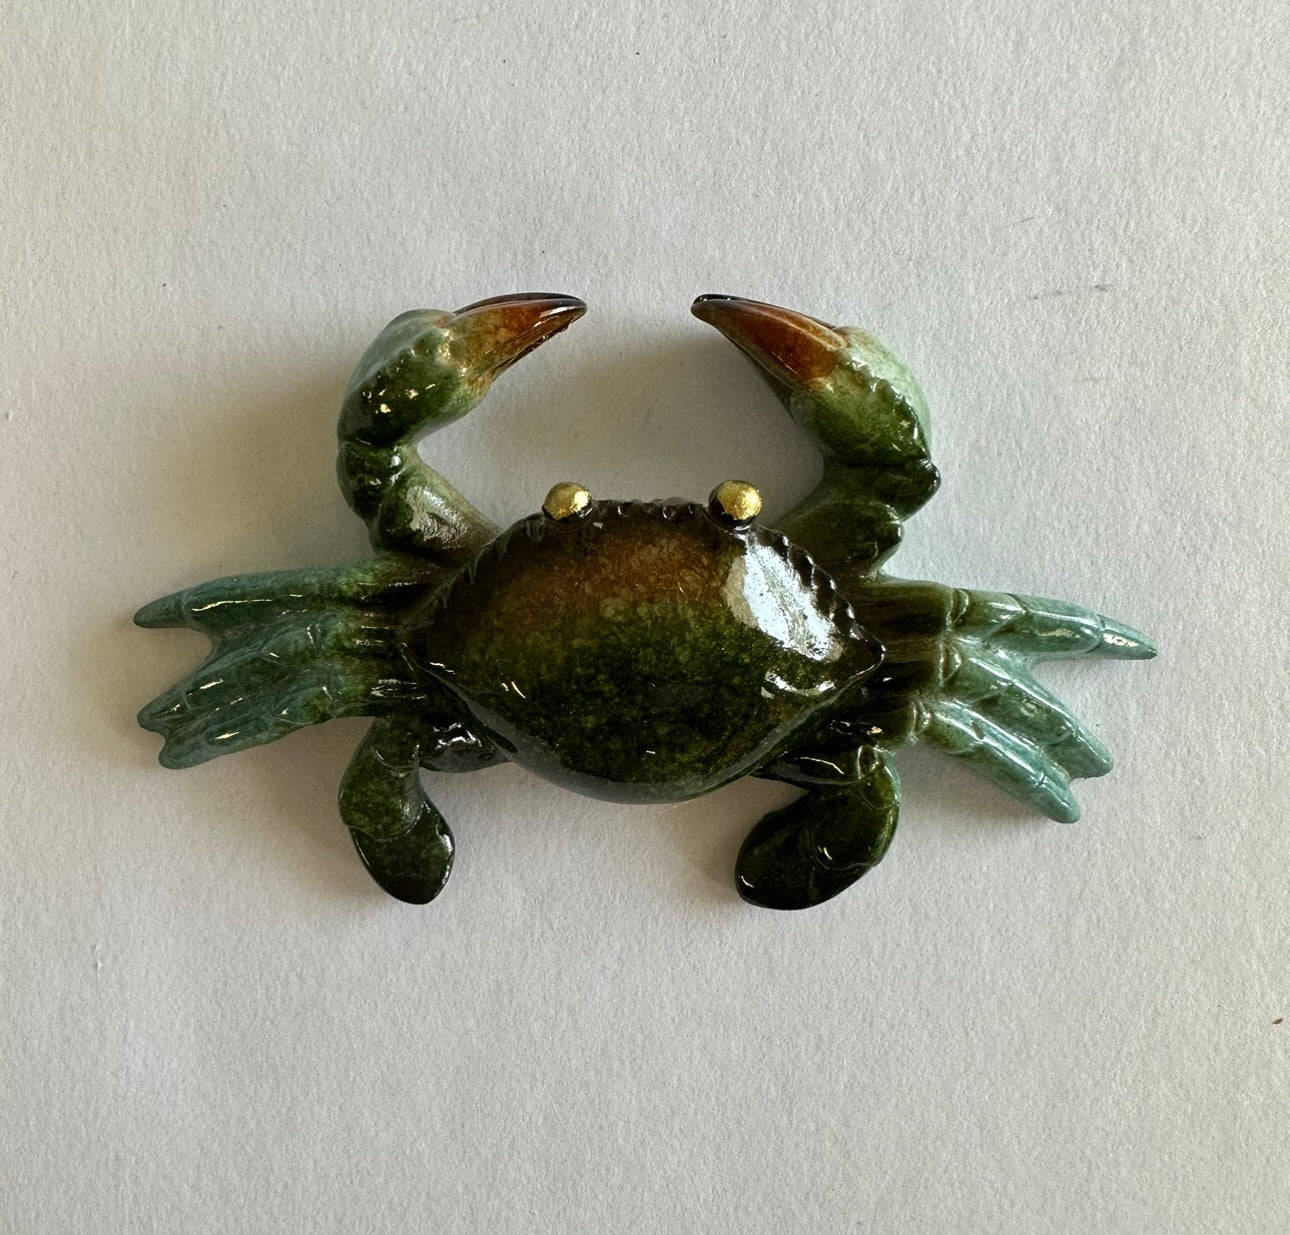 Aqua Green Crab Figurine 4"